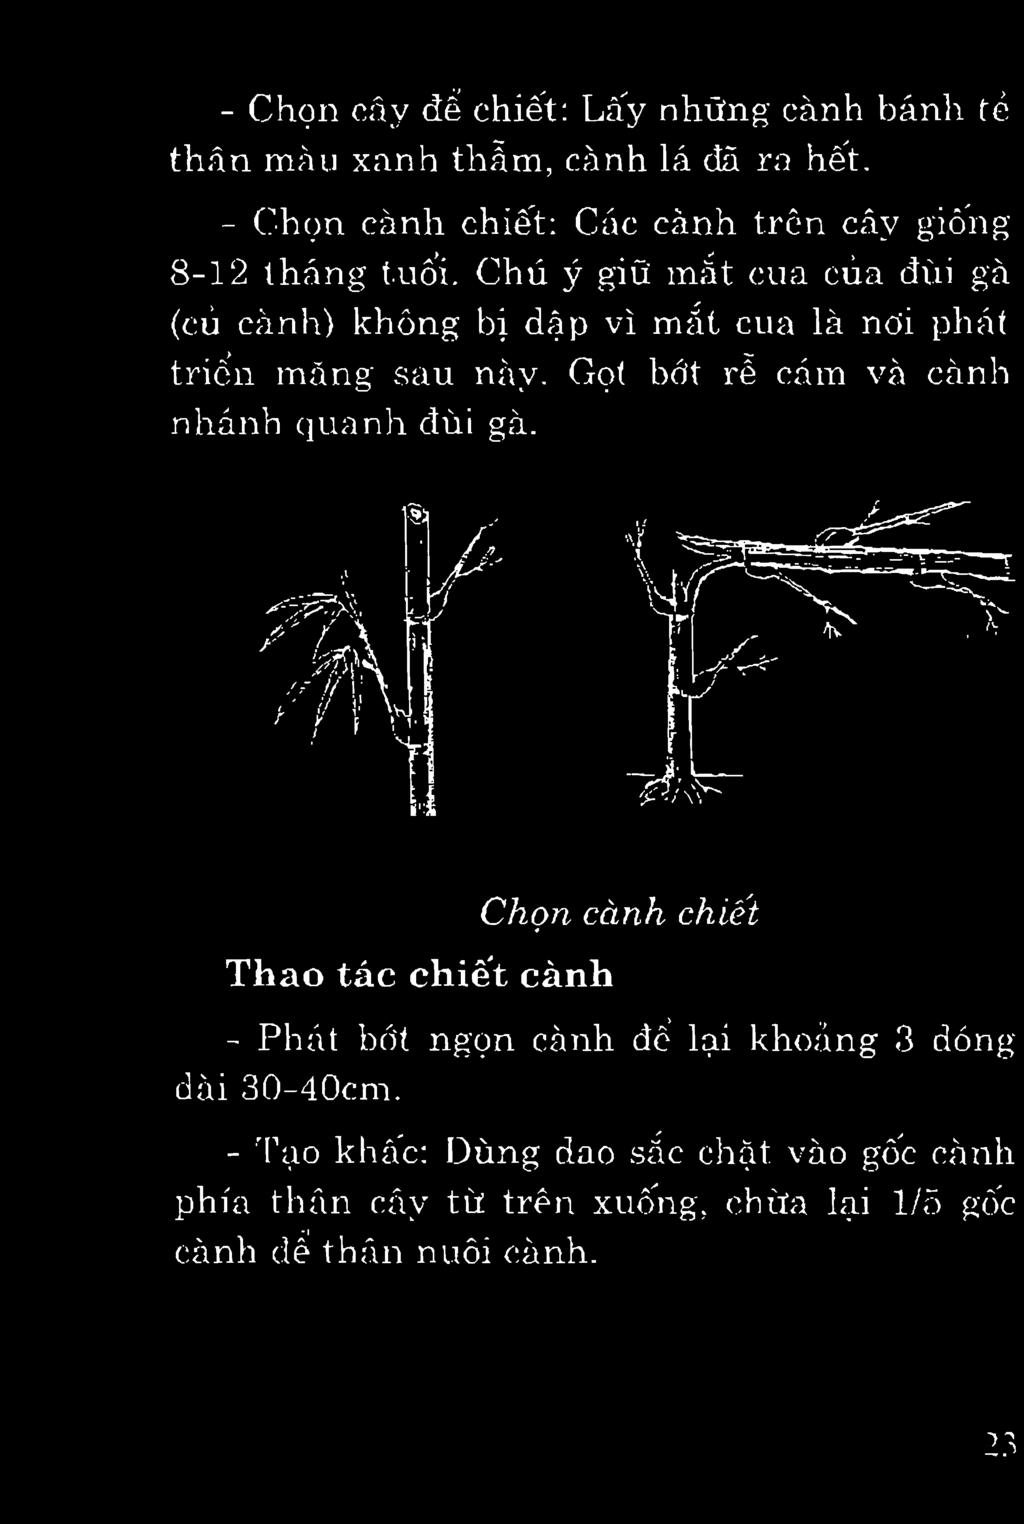 Chu y gifl mat cua cua dtii ga (cu canh) khong bi dap vi mat cua la ncji phat tricn mang sau nav.